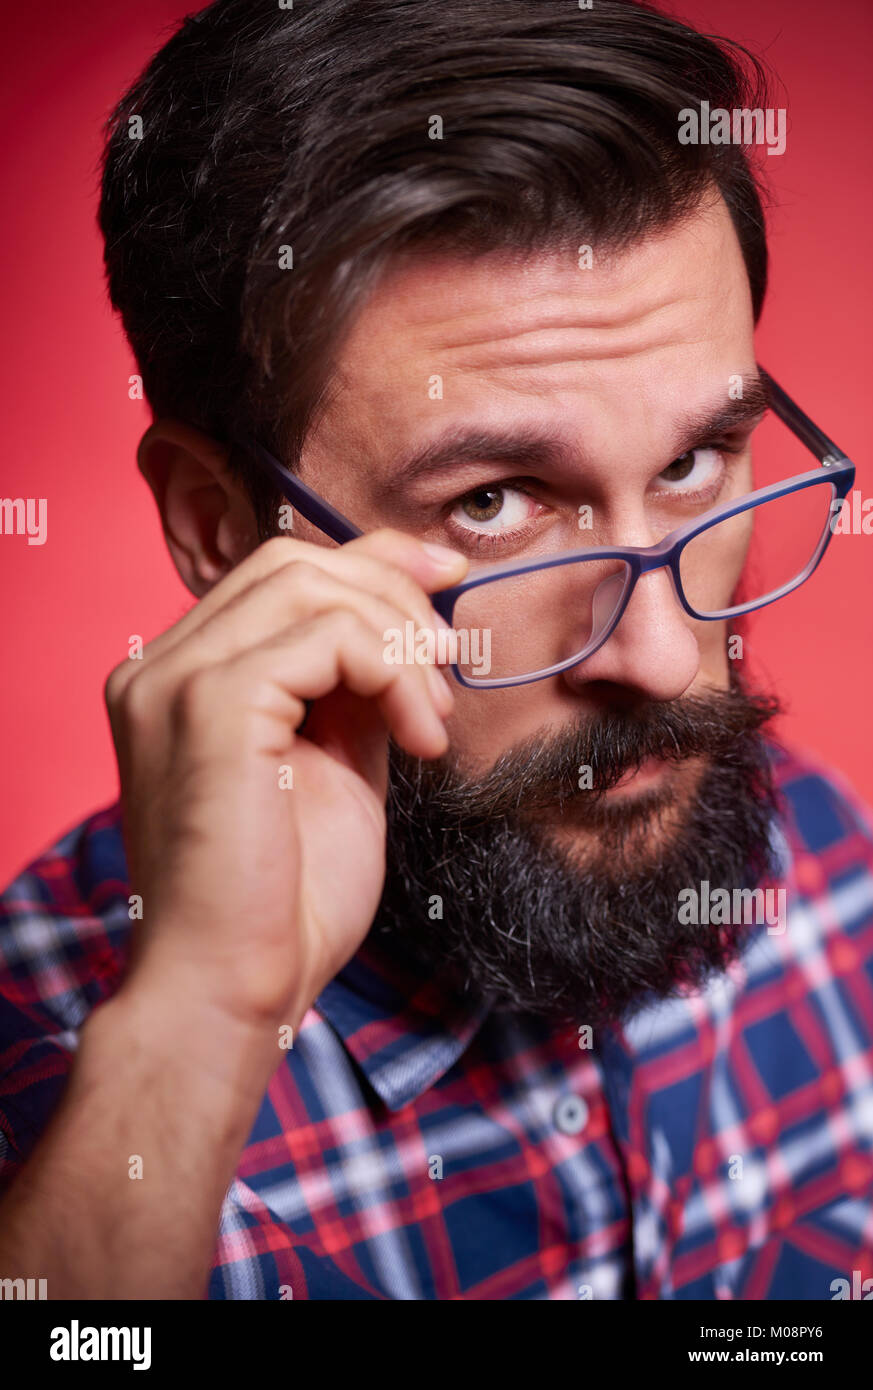 Displeased and suspicious man adjusting his eyeglasses Stock Photo - Alamy